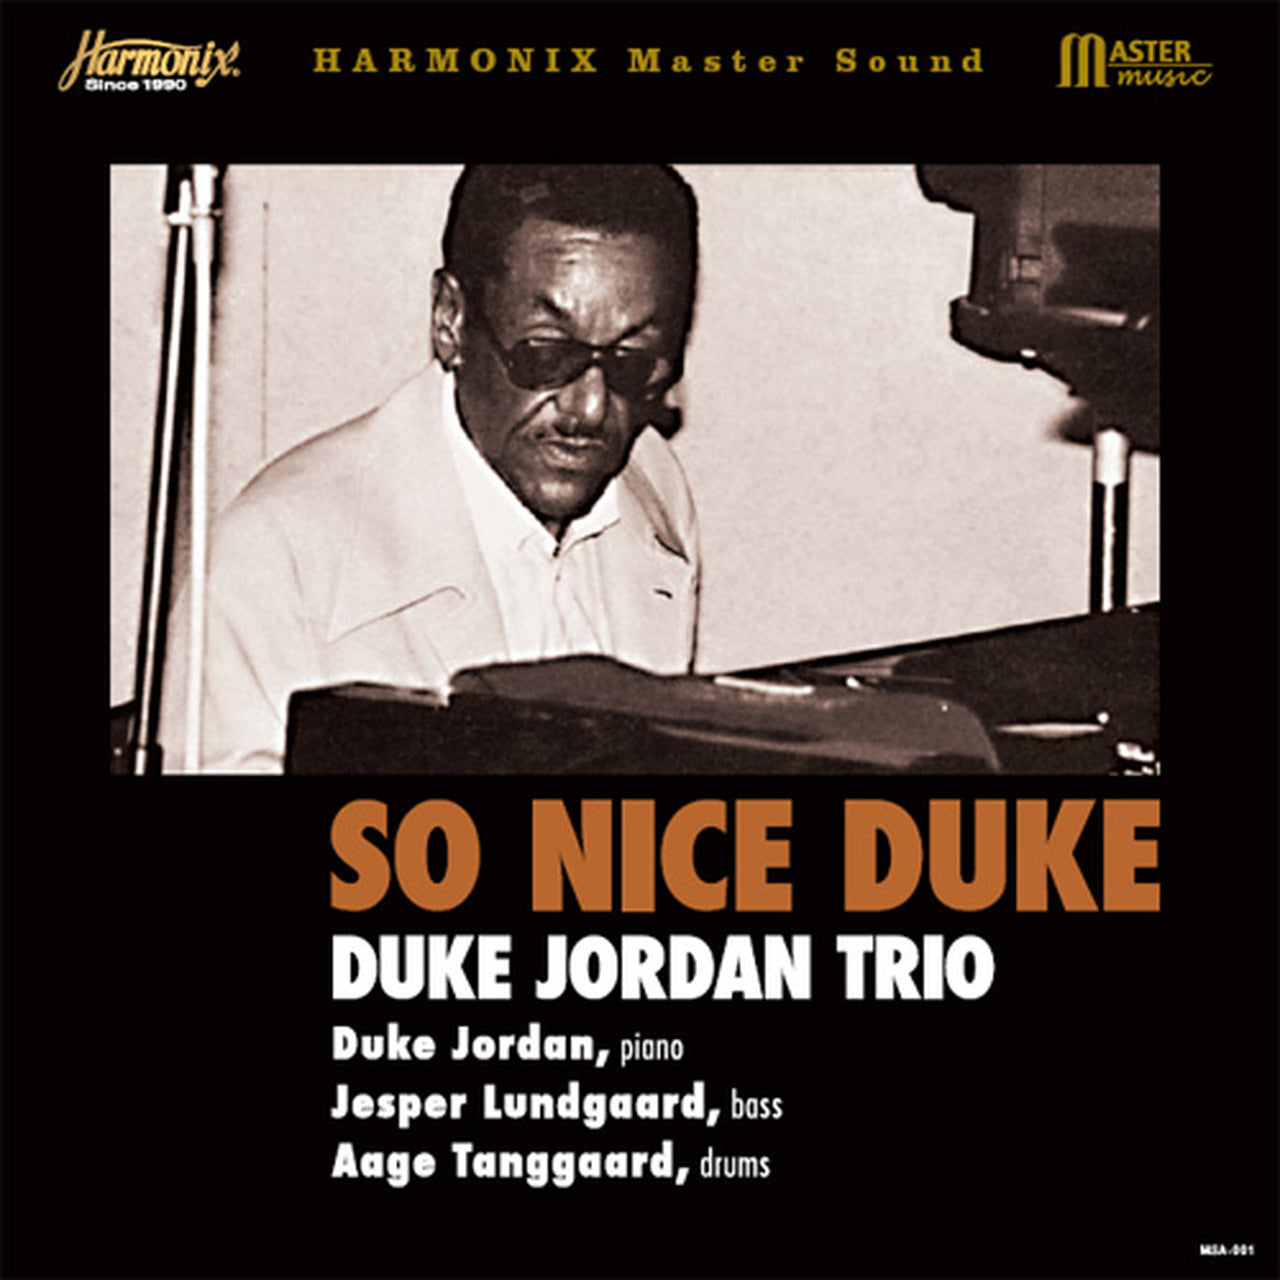 Duke Jordan Trio - So Nice Duke LP (180g, Audiophile Edition, Harmonix Master Sound)